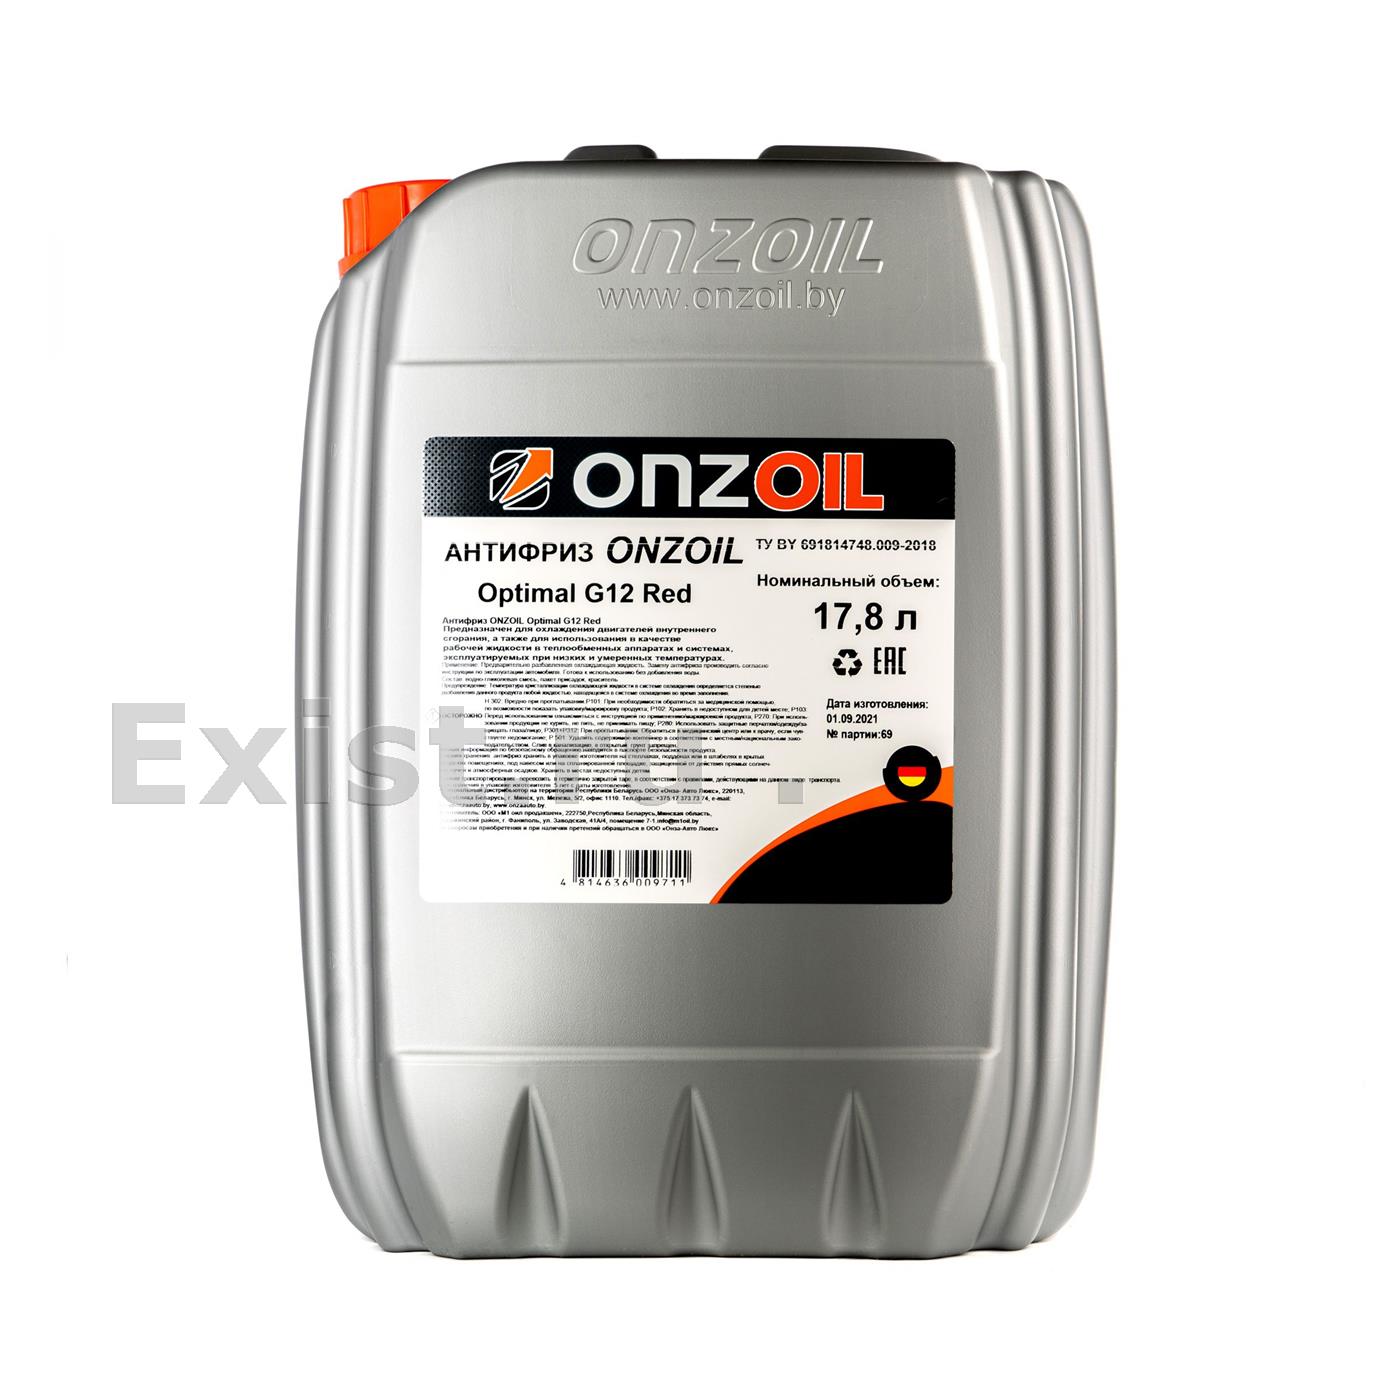 Onzoil 210253